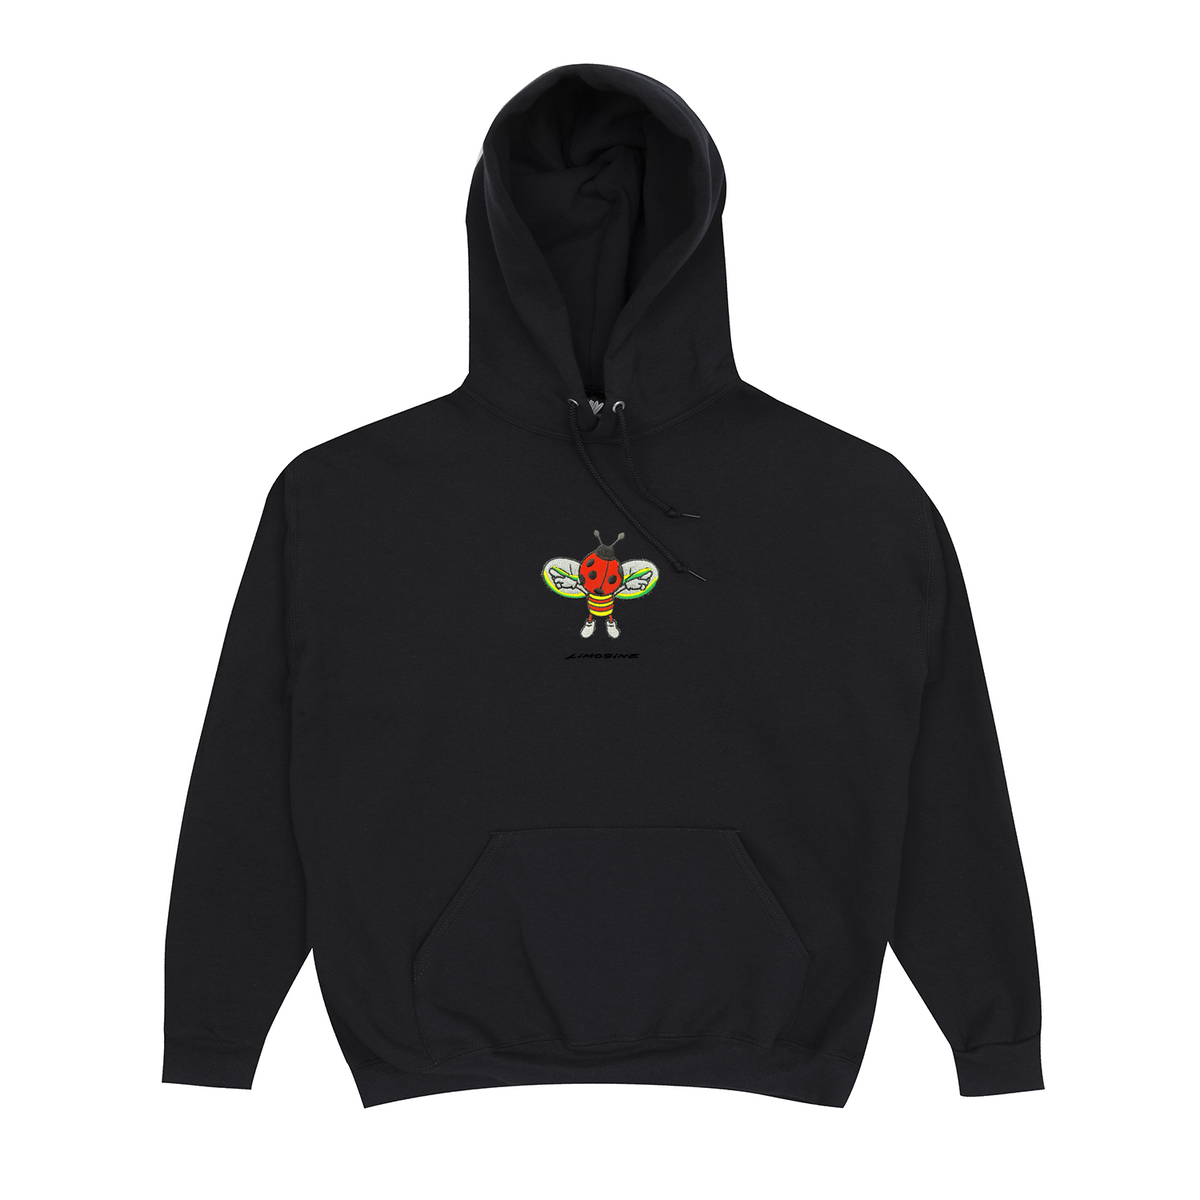 Limosine 'Bug' Hooded Sweatshirt - Black